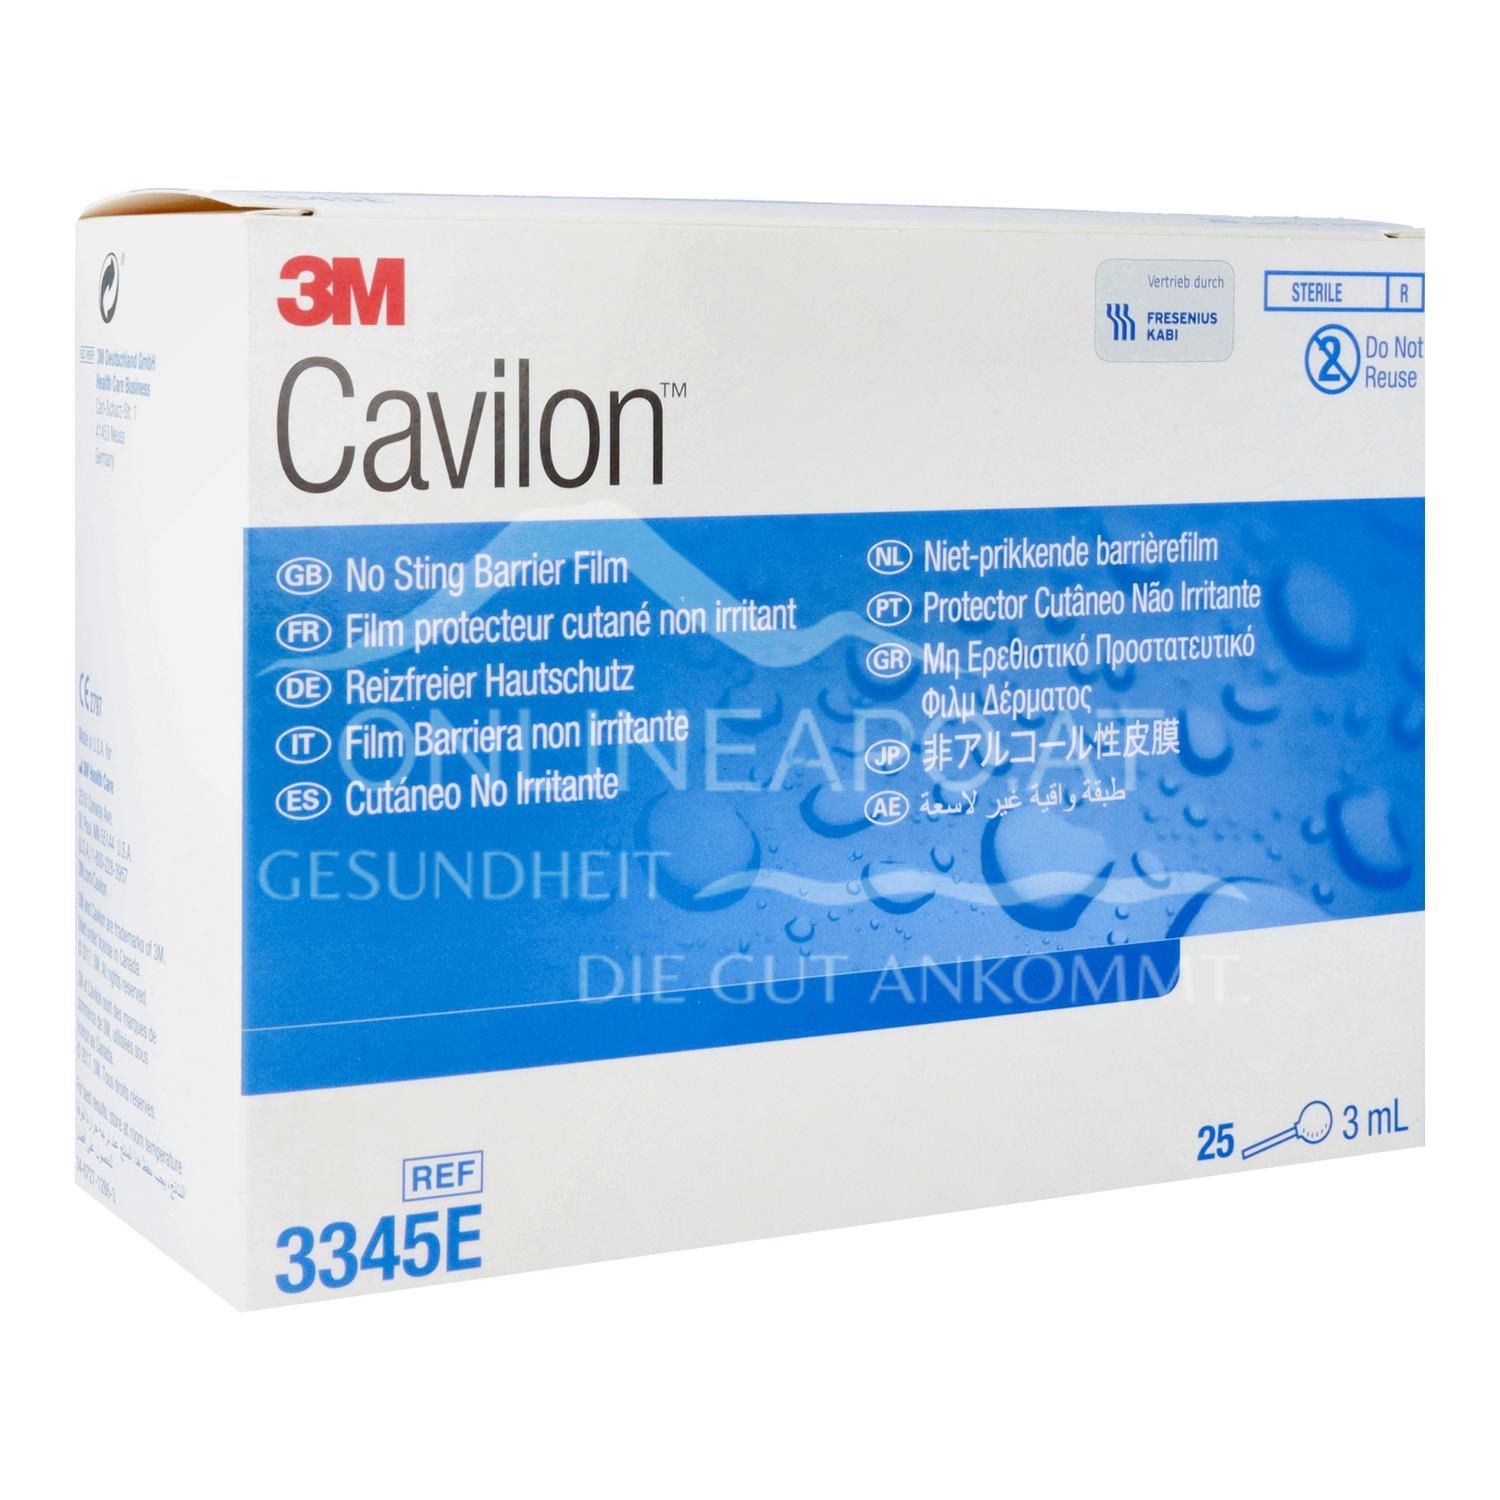 3M™ Cavilon™ Reizfreier Hautschutz Lolly, 3345E, 3ml